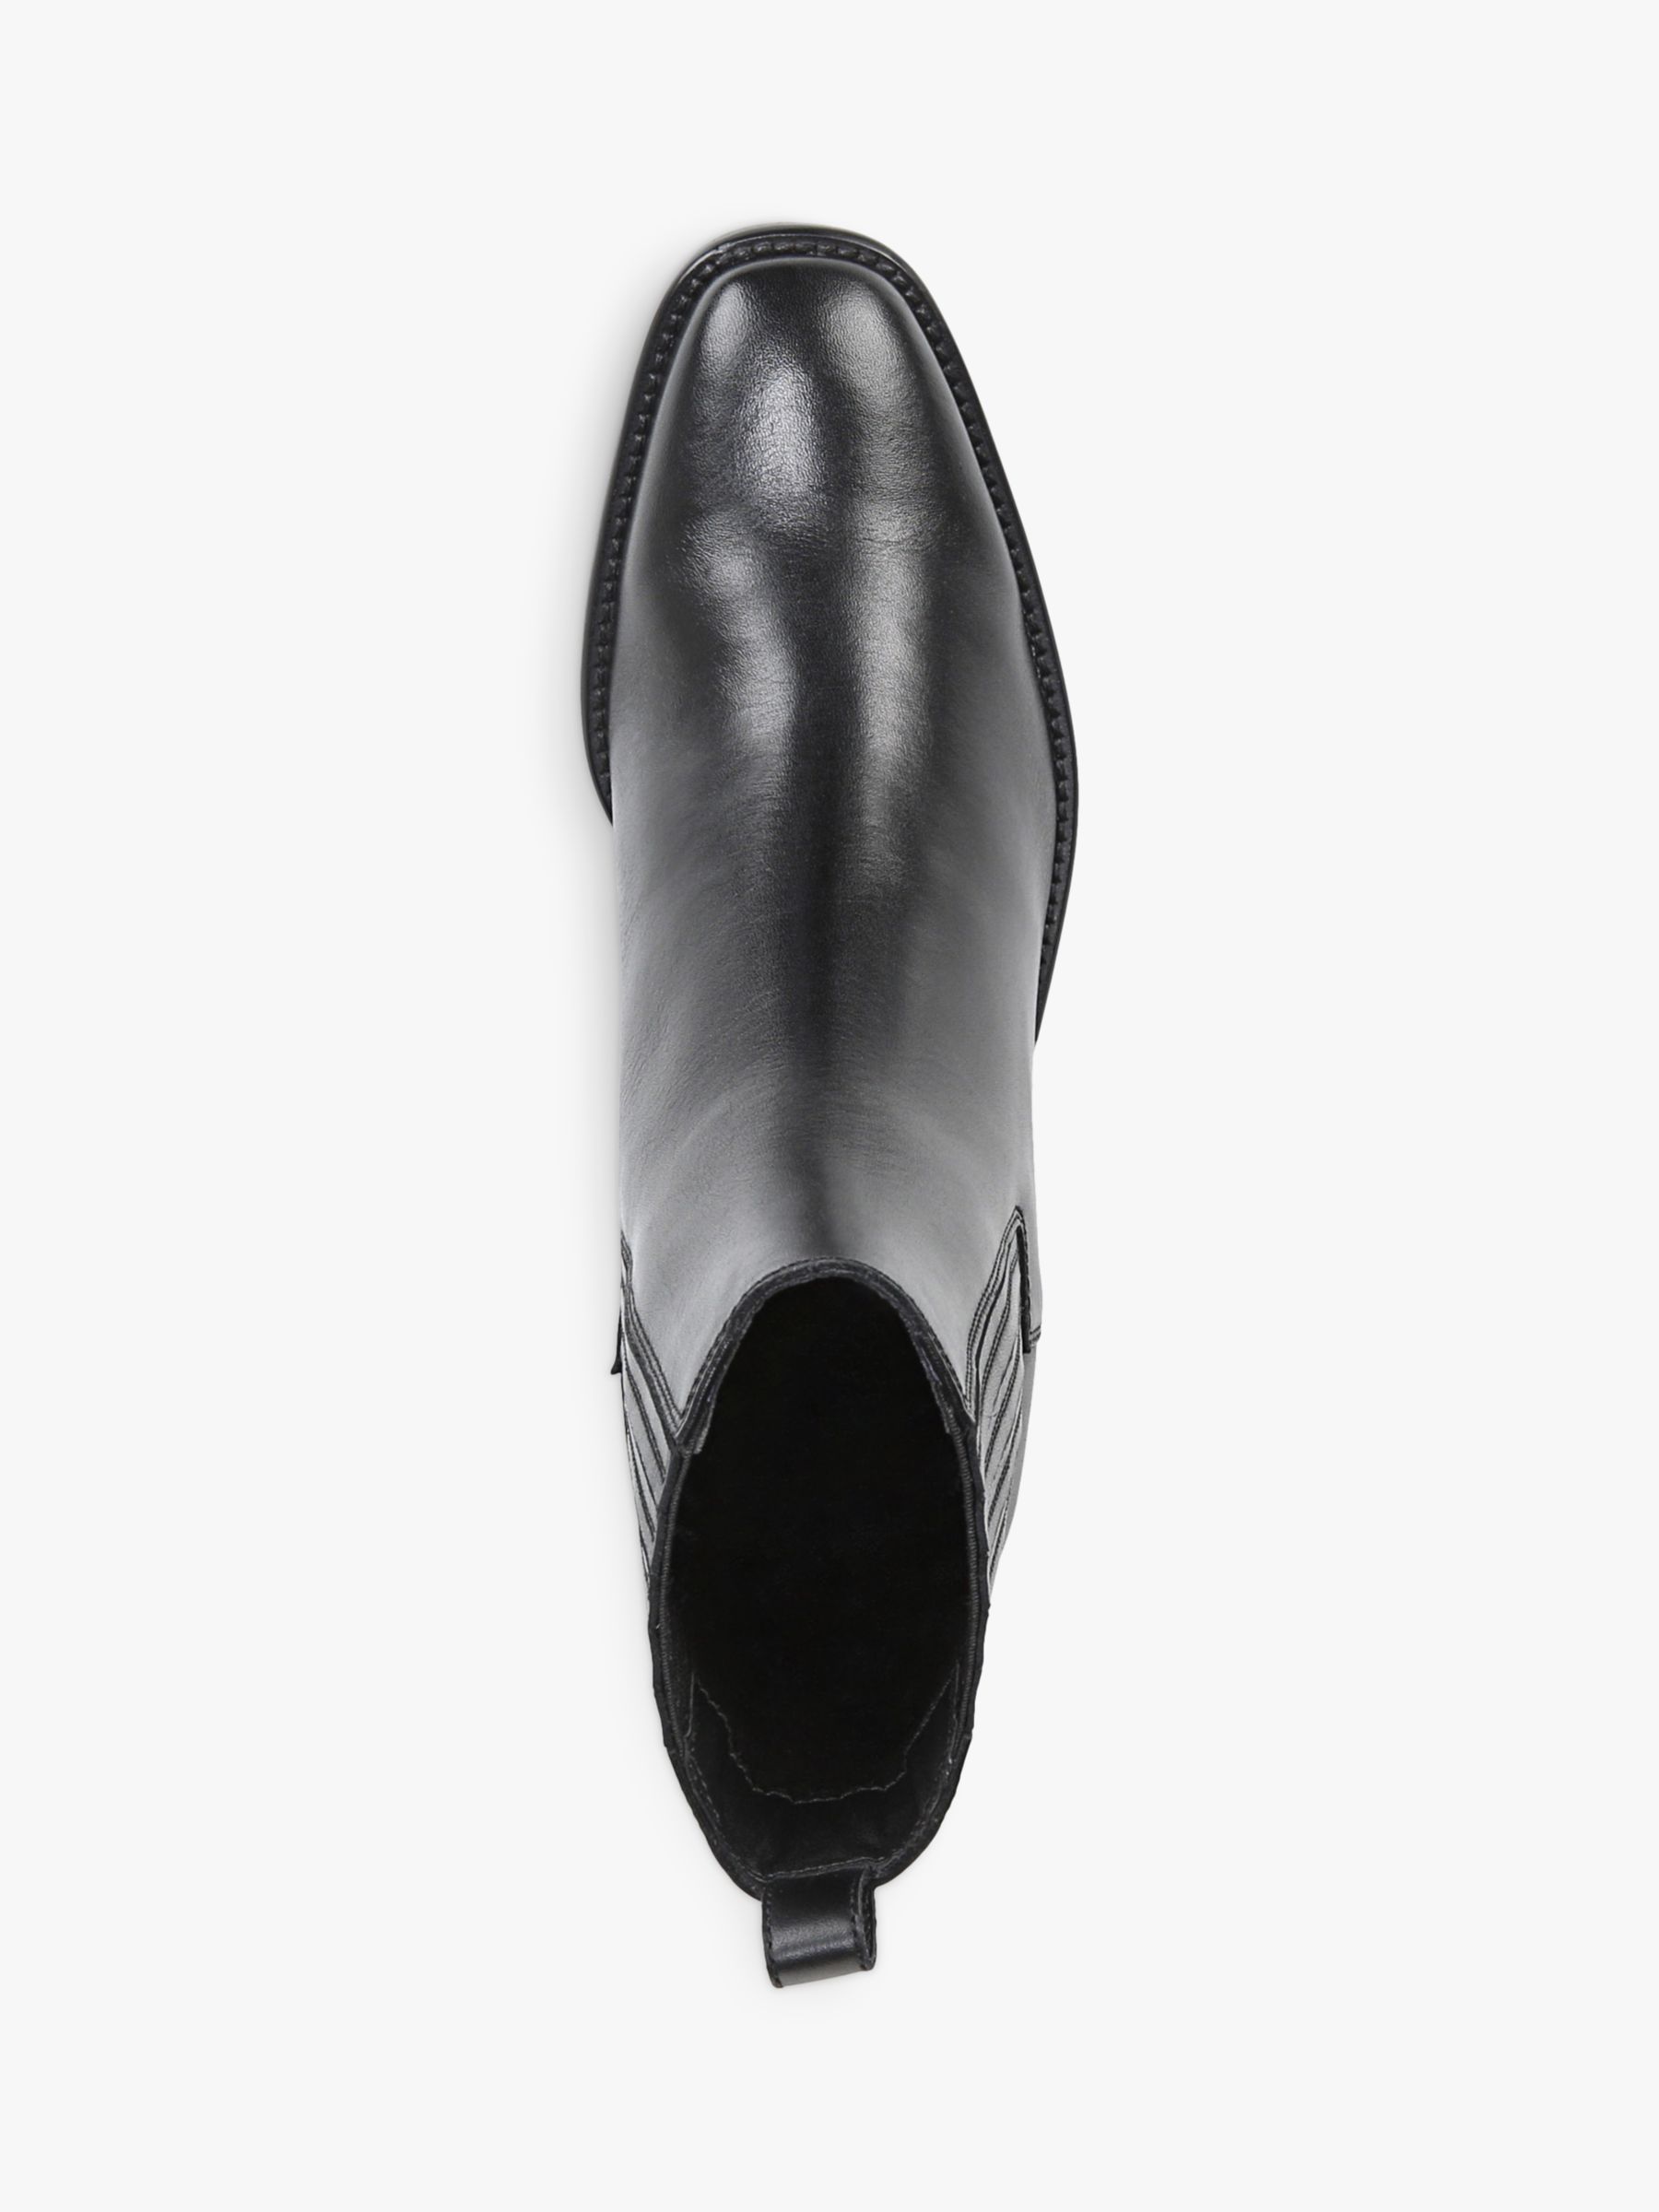 Sam Edelman Bronson Ankle Boots, Black, 7